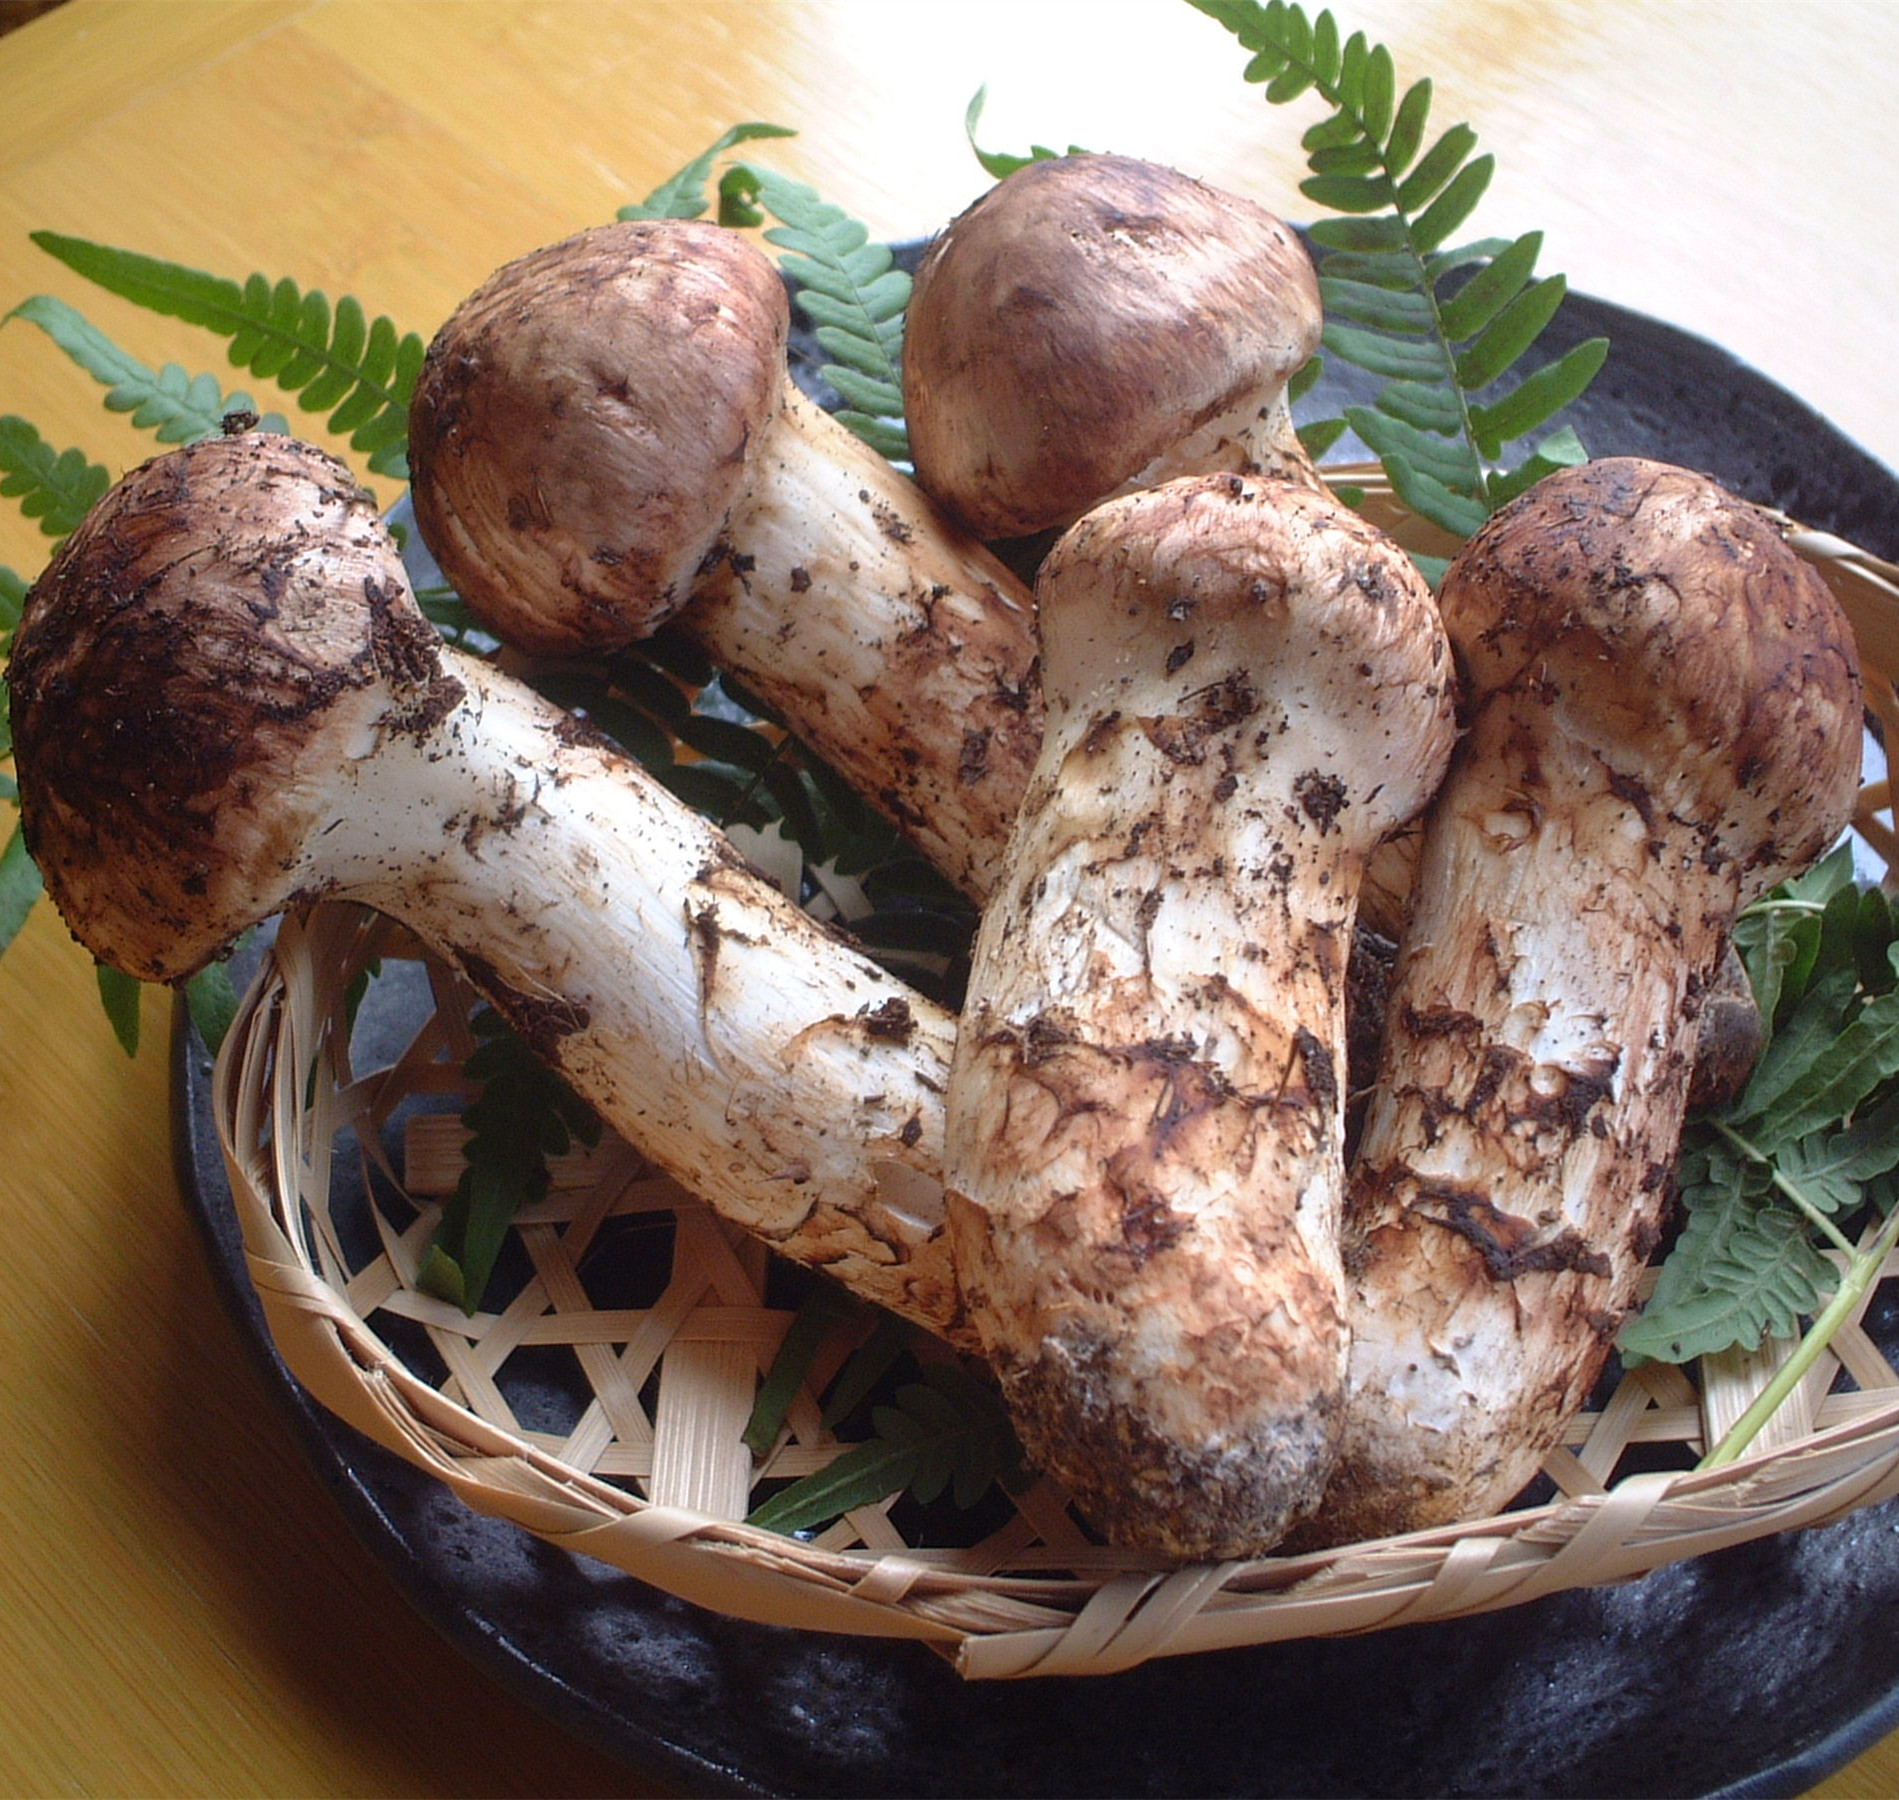 Why Are Matsutake Mushrooms So Expensive?